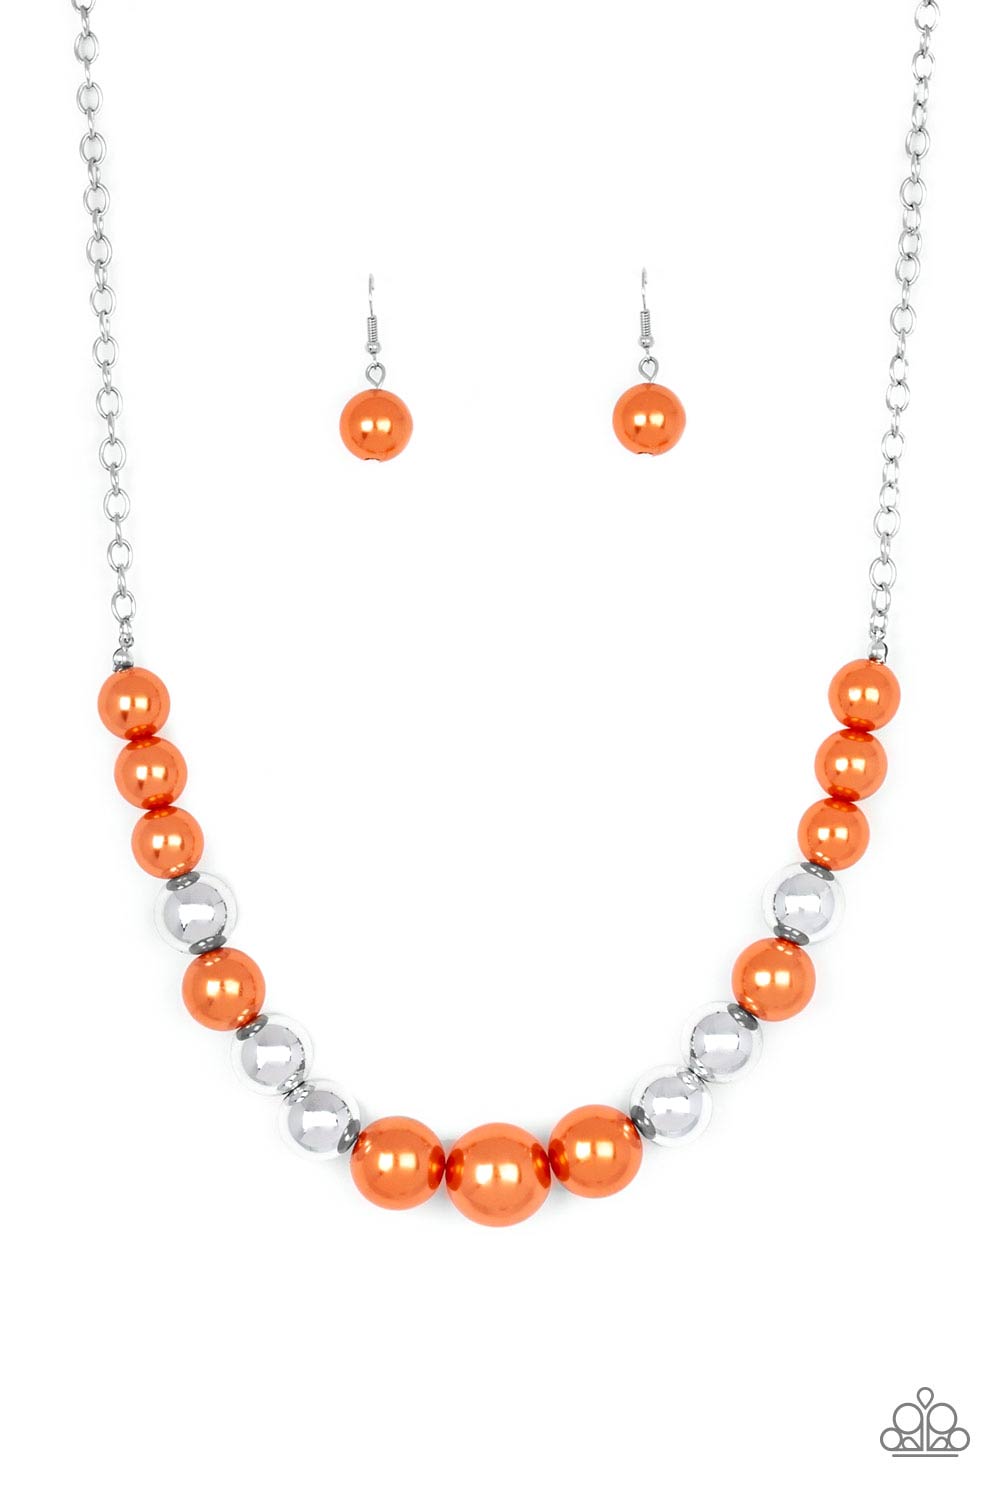 Take Note - Orange Necklace - Paparazzi Accessories